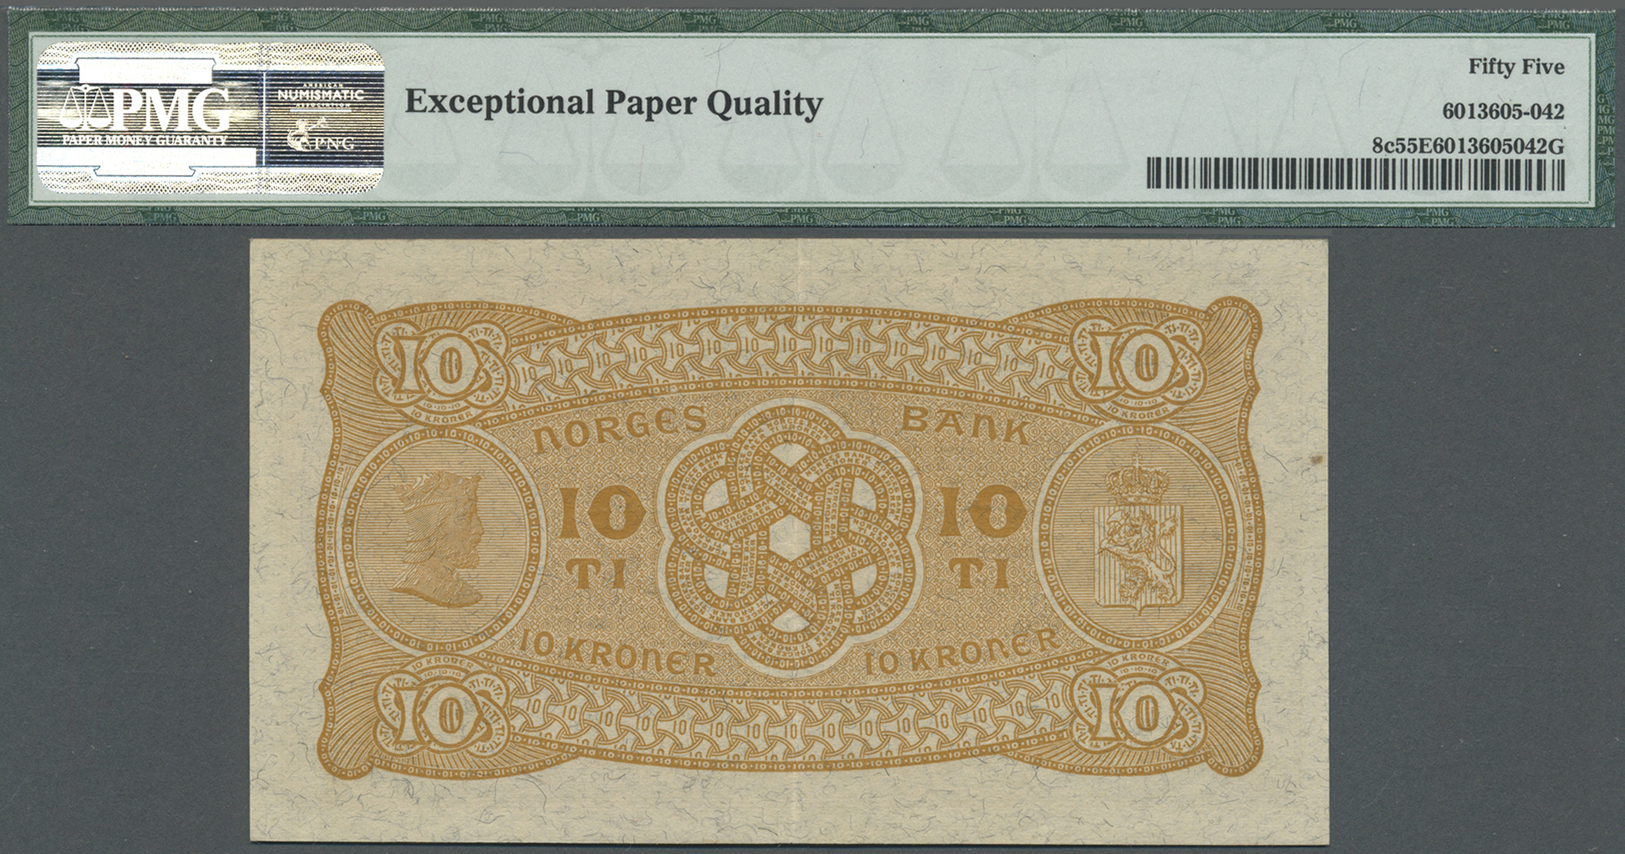 01914 Norway / Norwegen: 10 Kroner 1936 Signature: Meldahl-Nielsen, P.8c, Excellent Condition With Vertical Fold At Cent - Norway